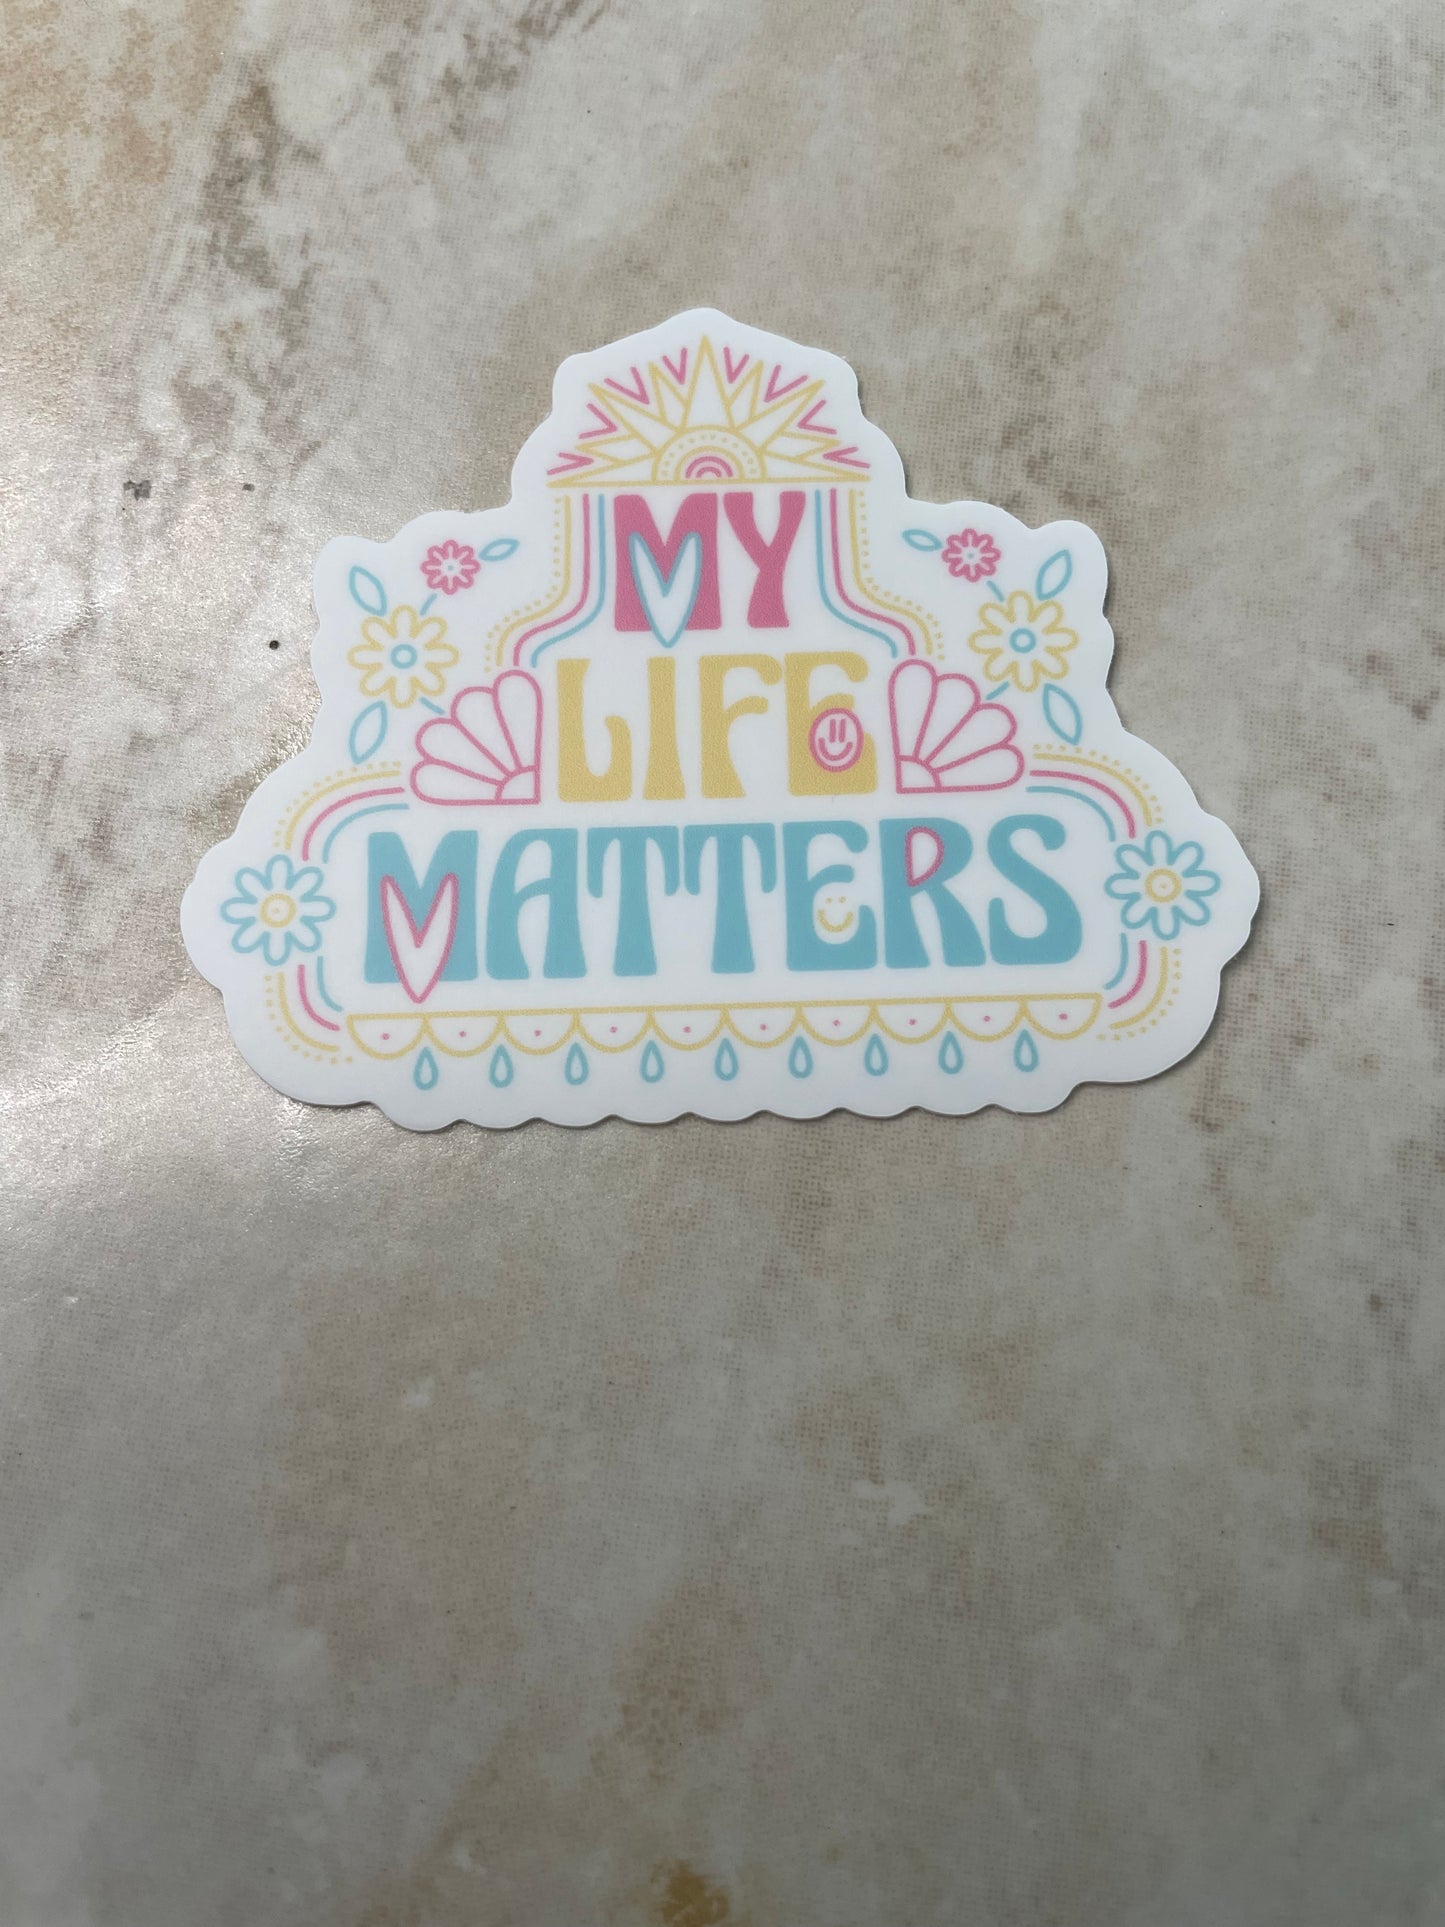 My Life Matters Body Positivity Sticker